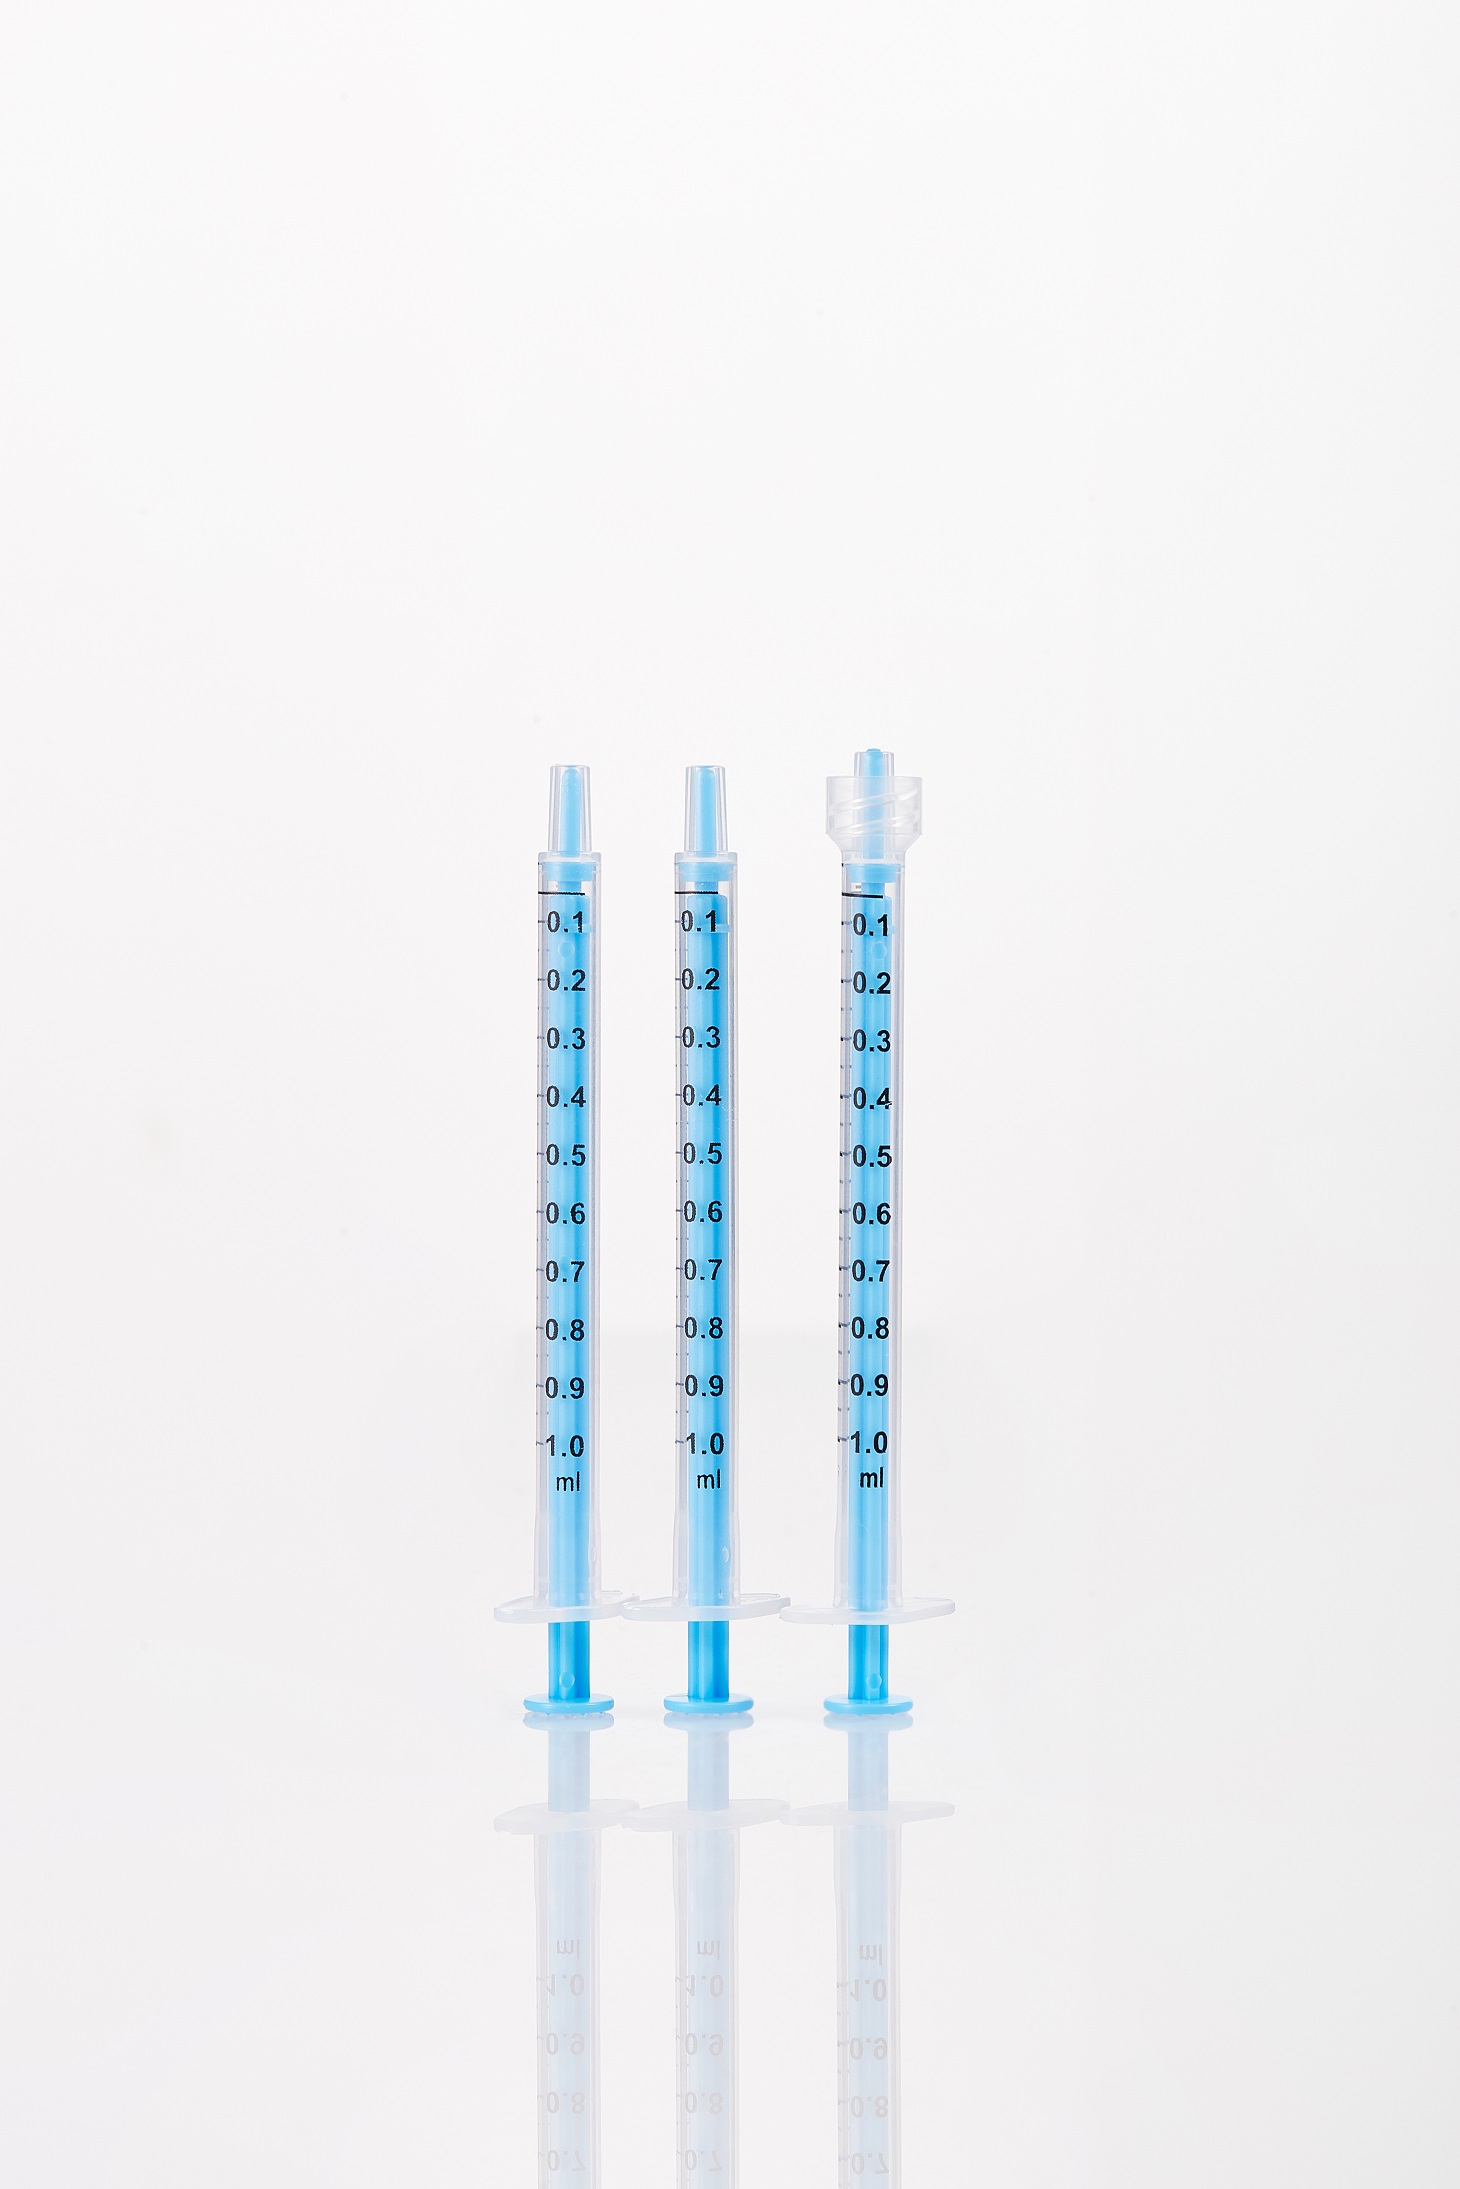 2 part syringe for ophthalmology